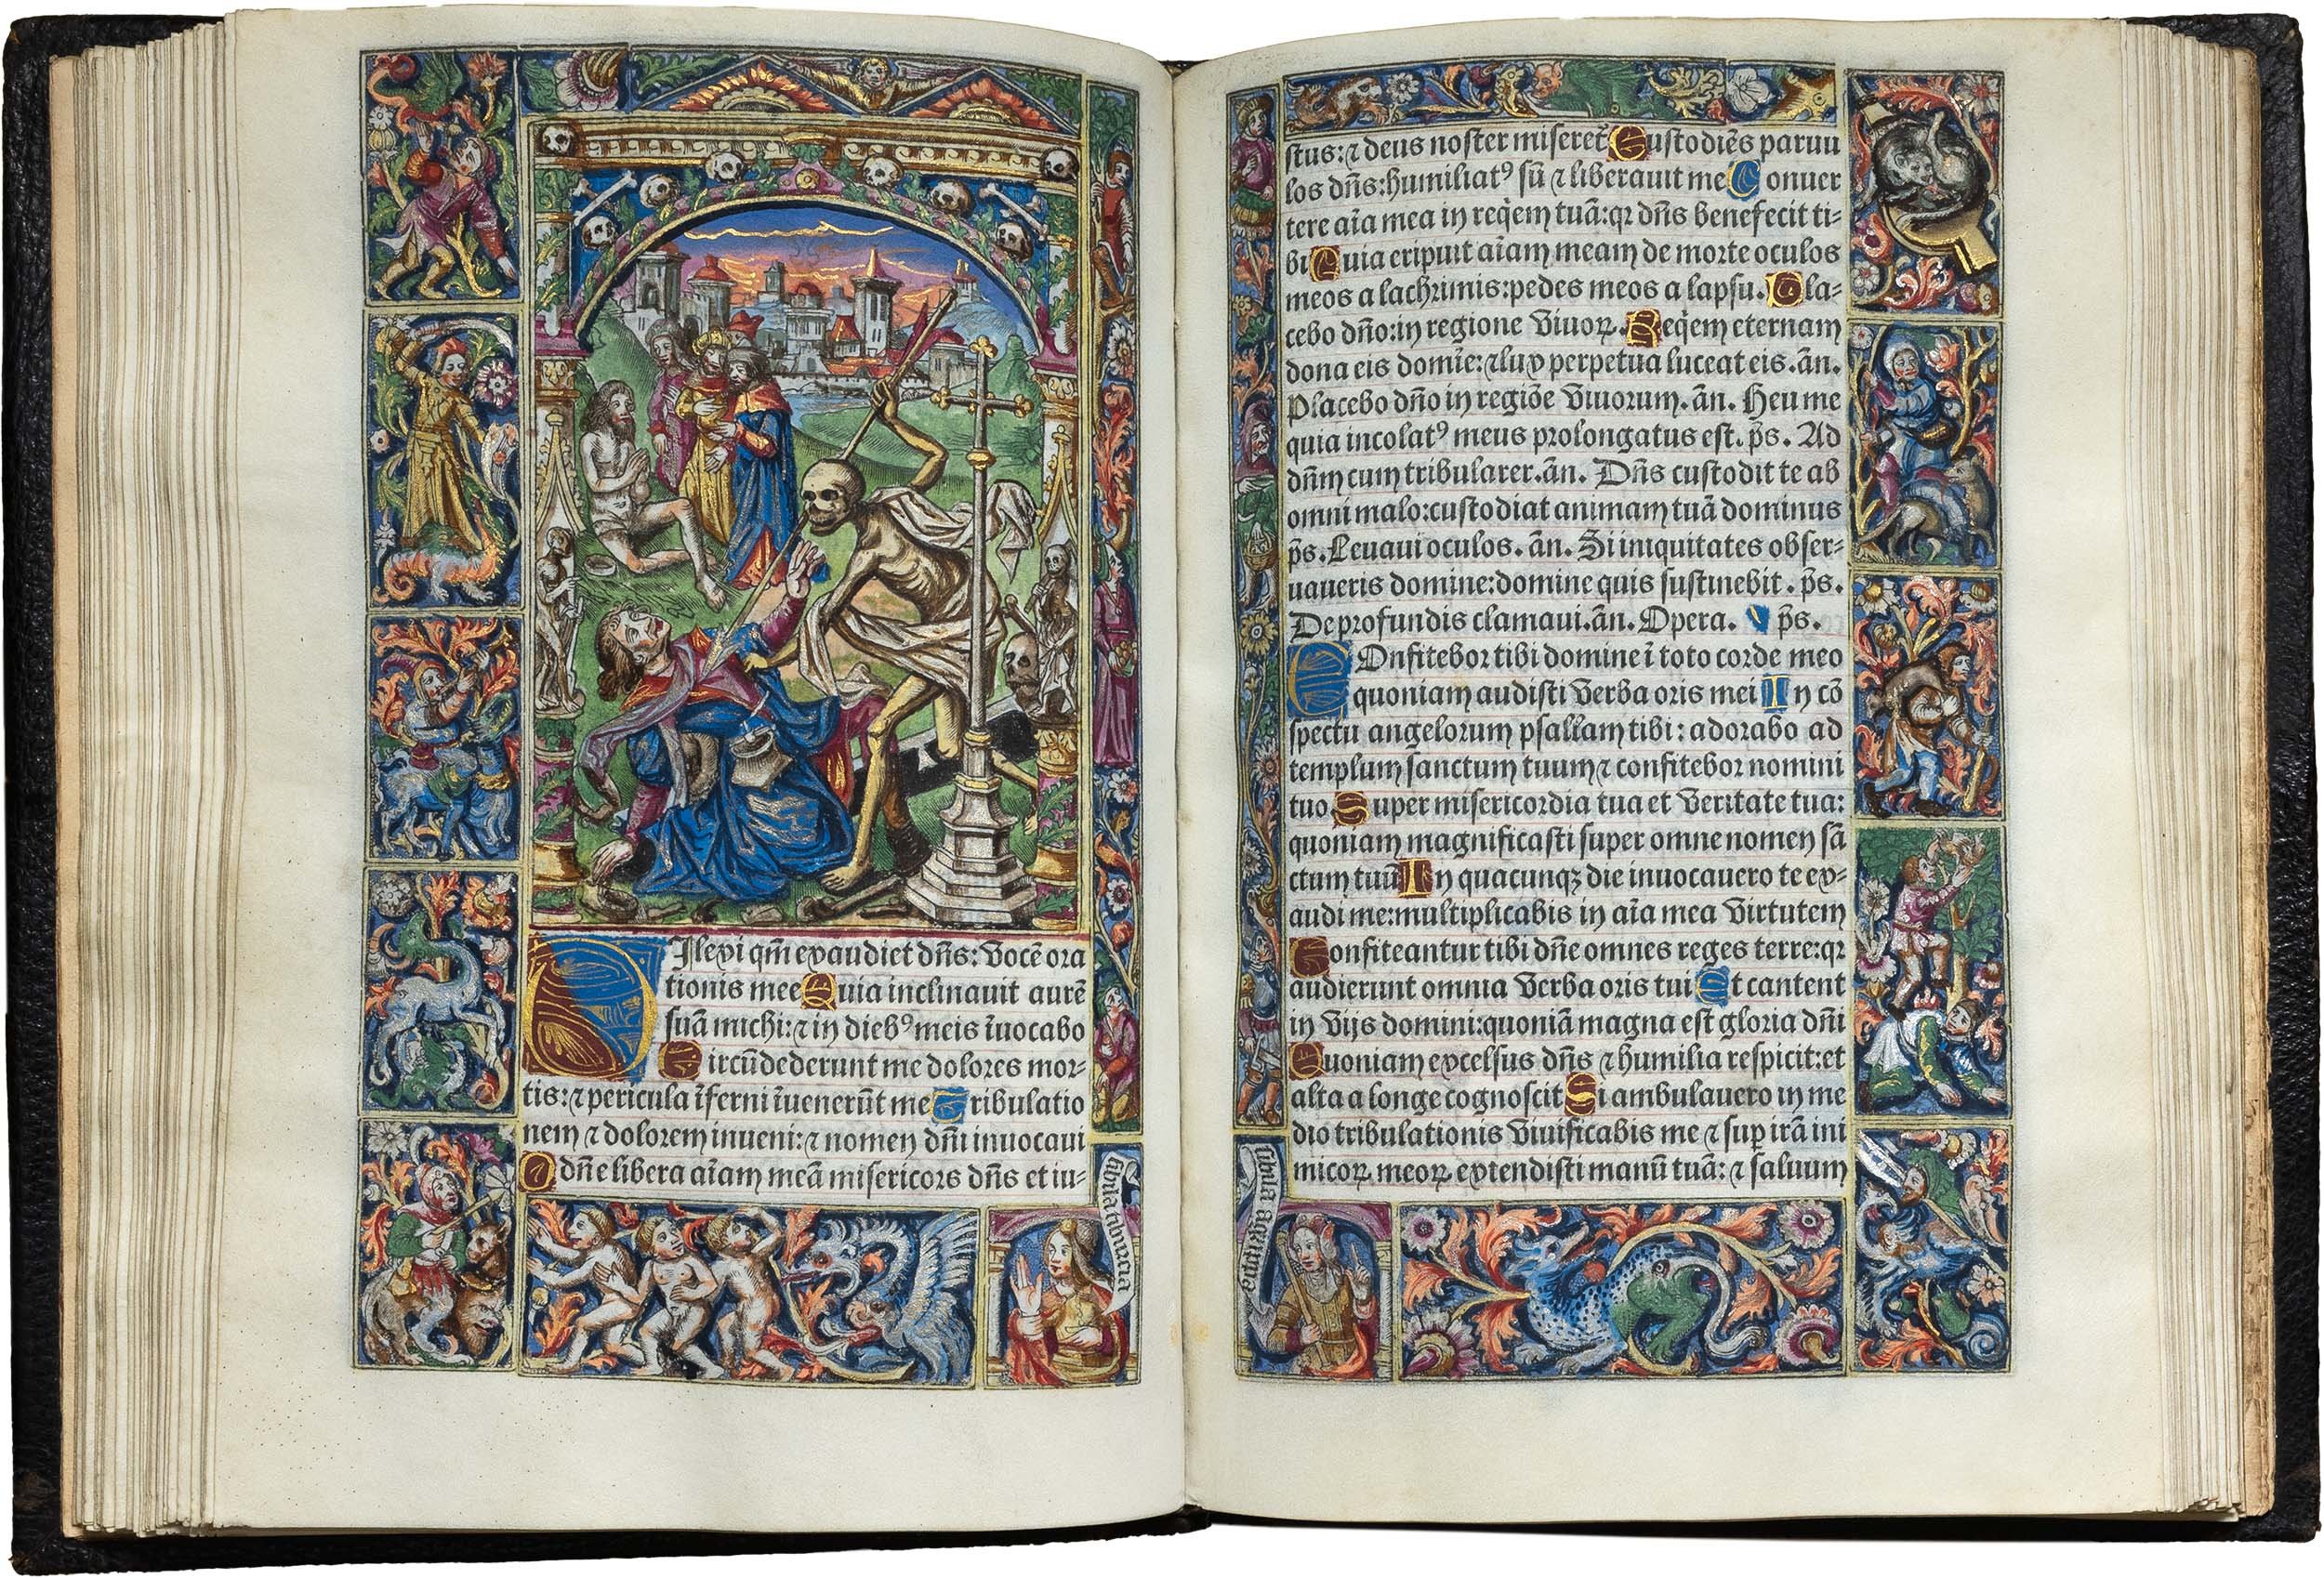 Printed-Book-of-Hours-10-january-1503-horae-bmv-kerver-remacle-illuminated-vellum-copy-schönborn-buchheim-50.jpg